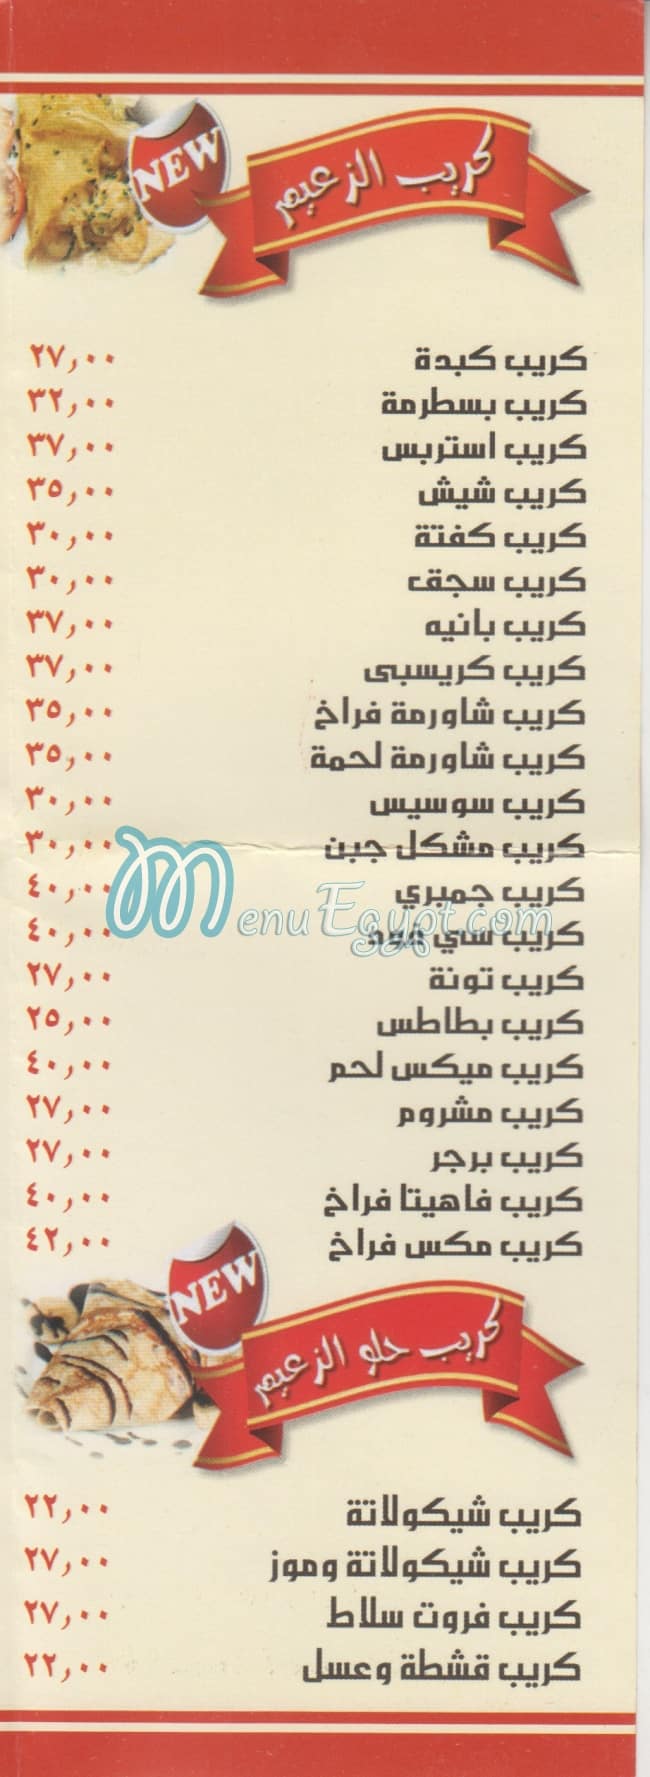 EL ZA3YM ALF MASKN menu Egypt 1